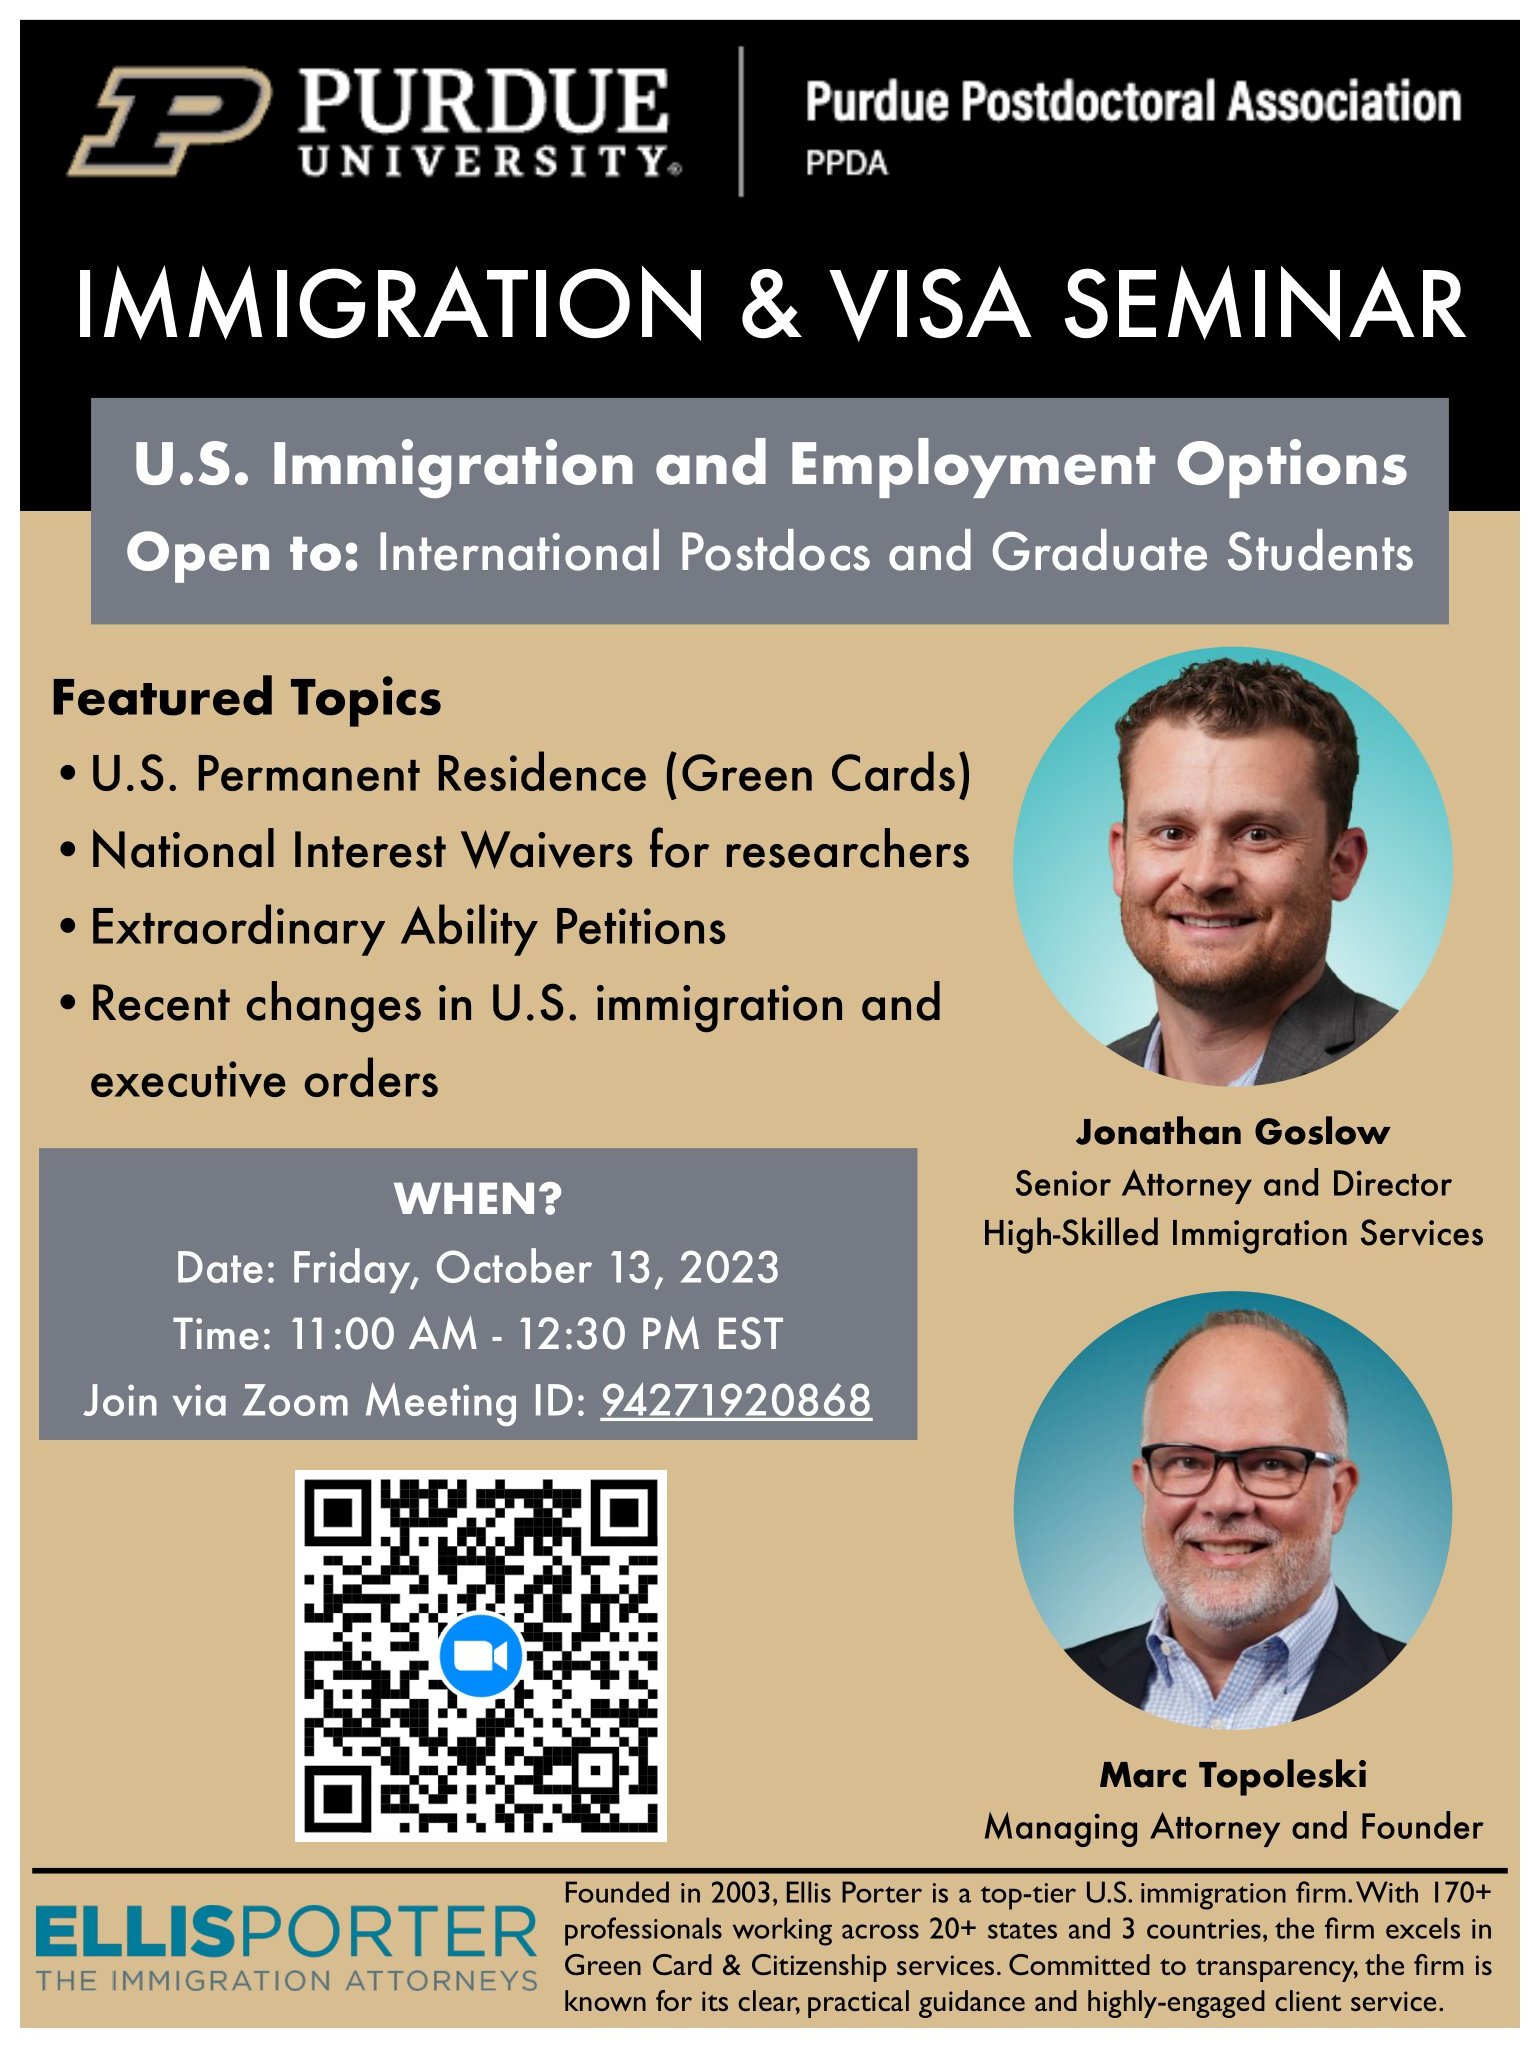 PPDA-Immigration-and-Visa-Seminar.jpg